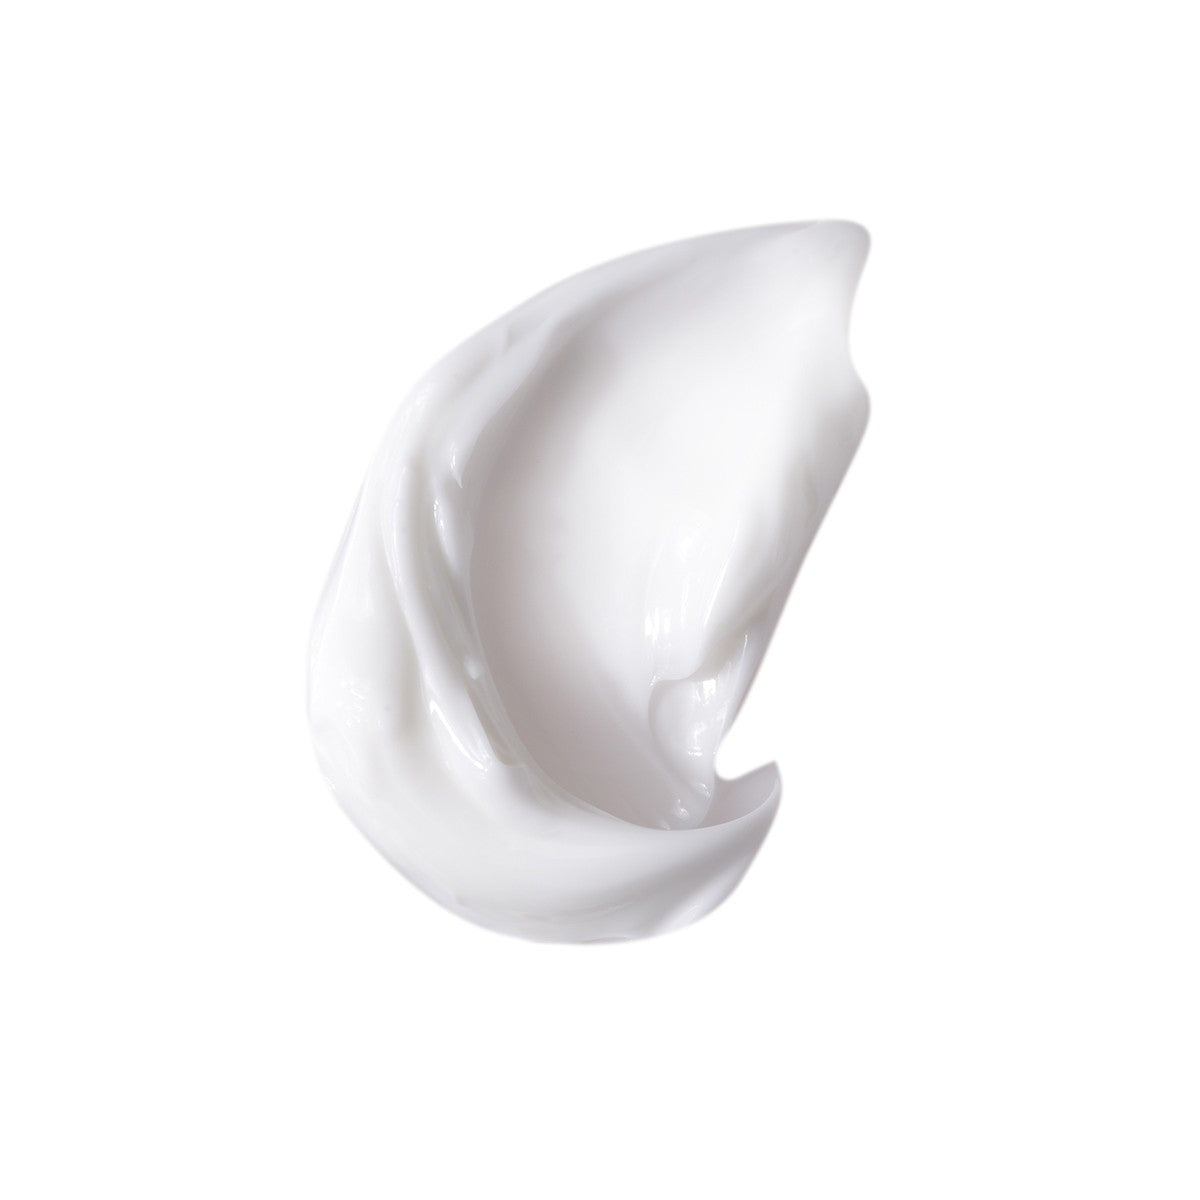 Refinee Firming Mineral Moisture Cream